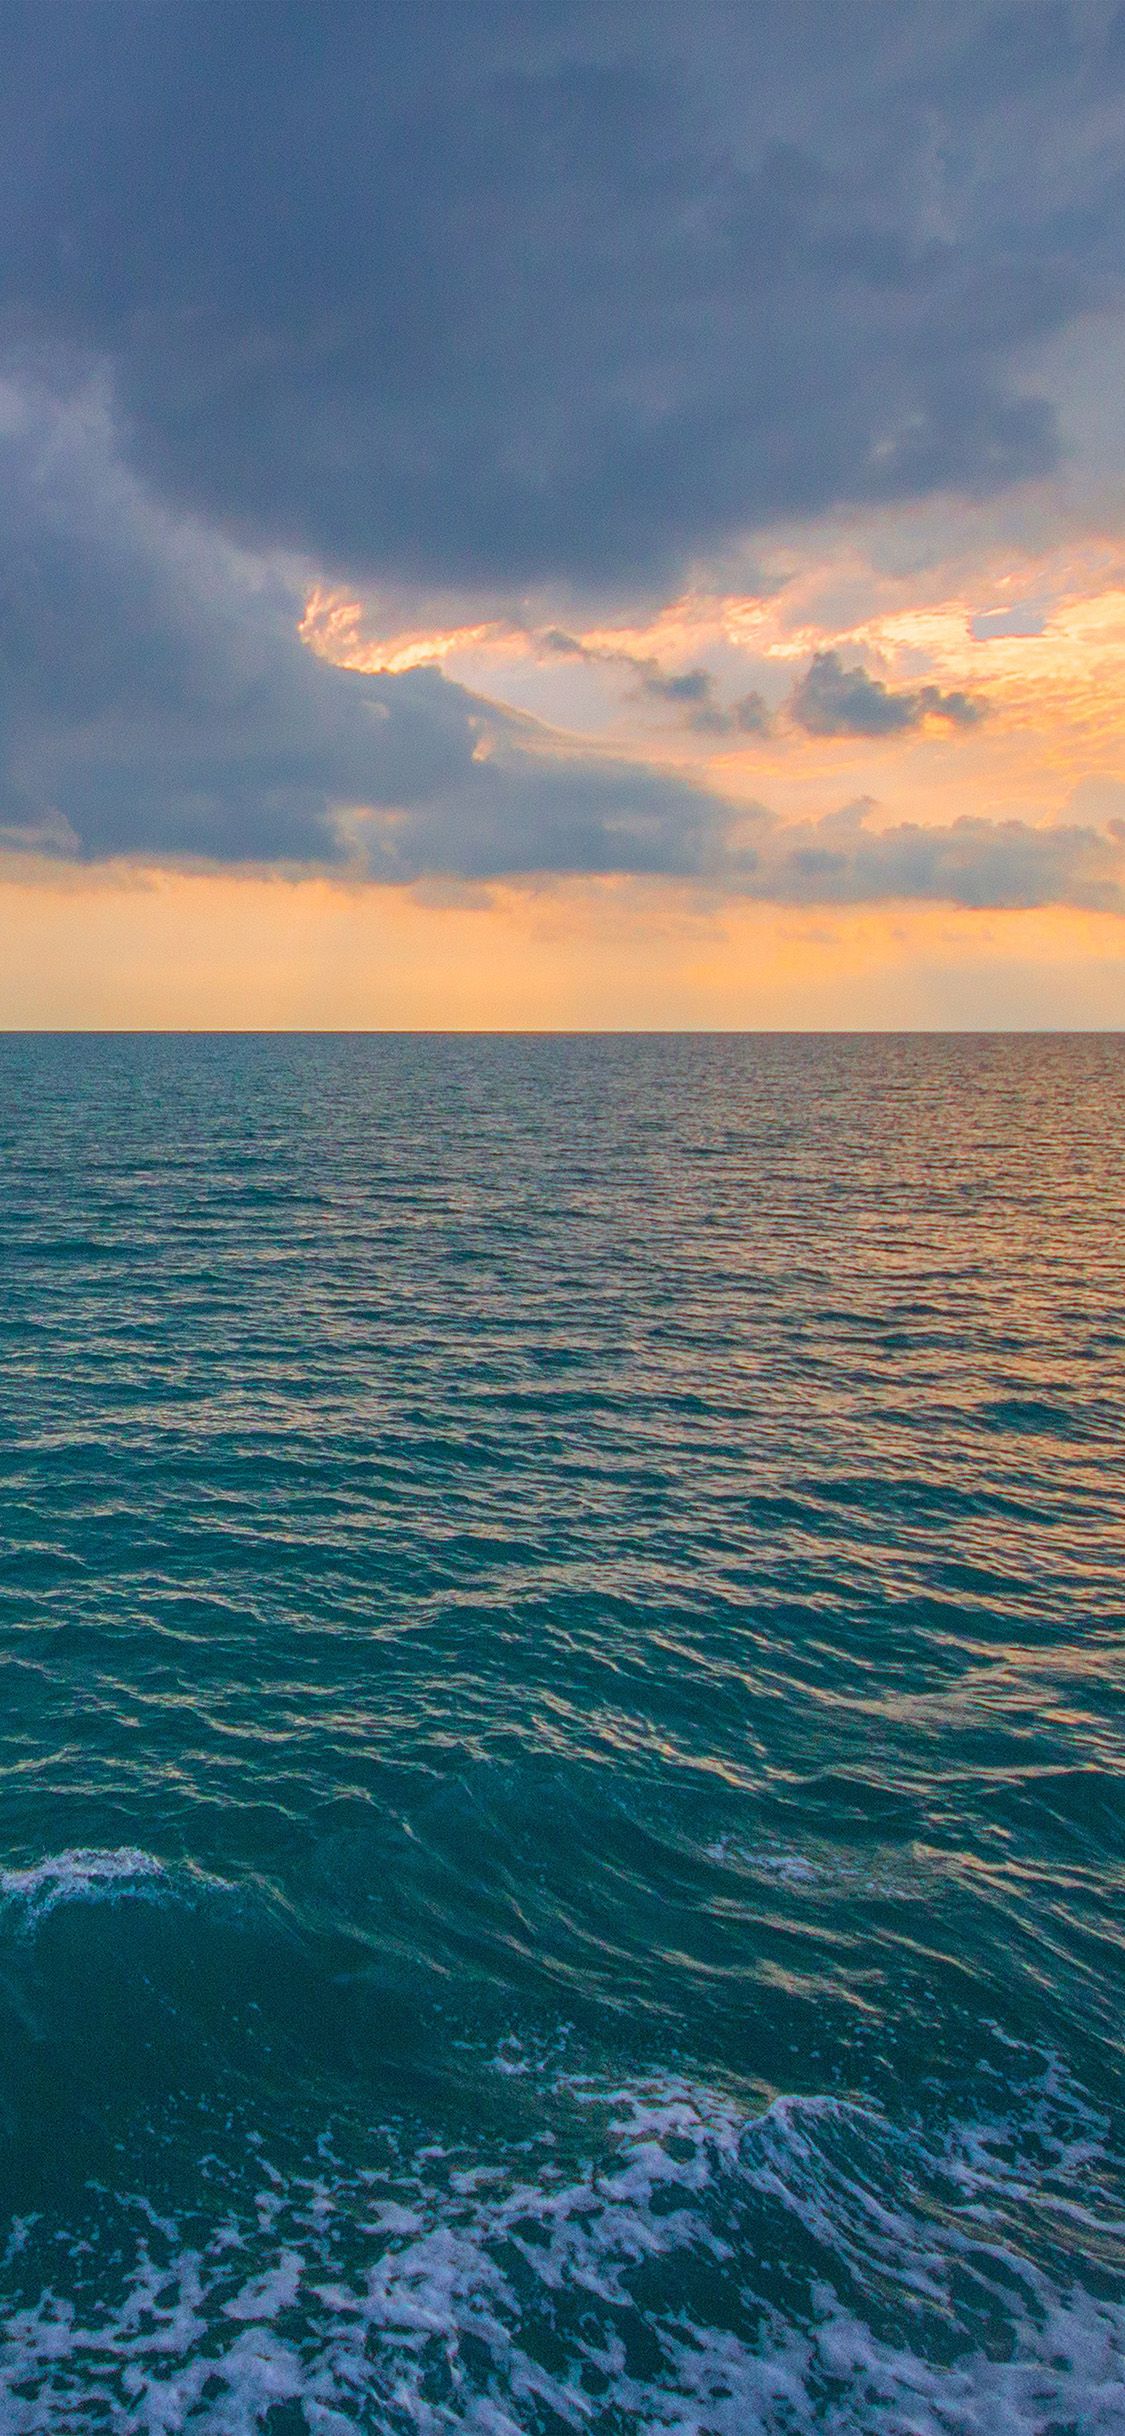 iPhone wallpaper. sunny sea sunset ocean water nature